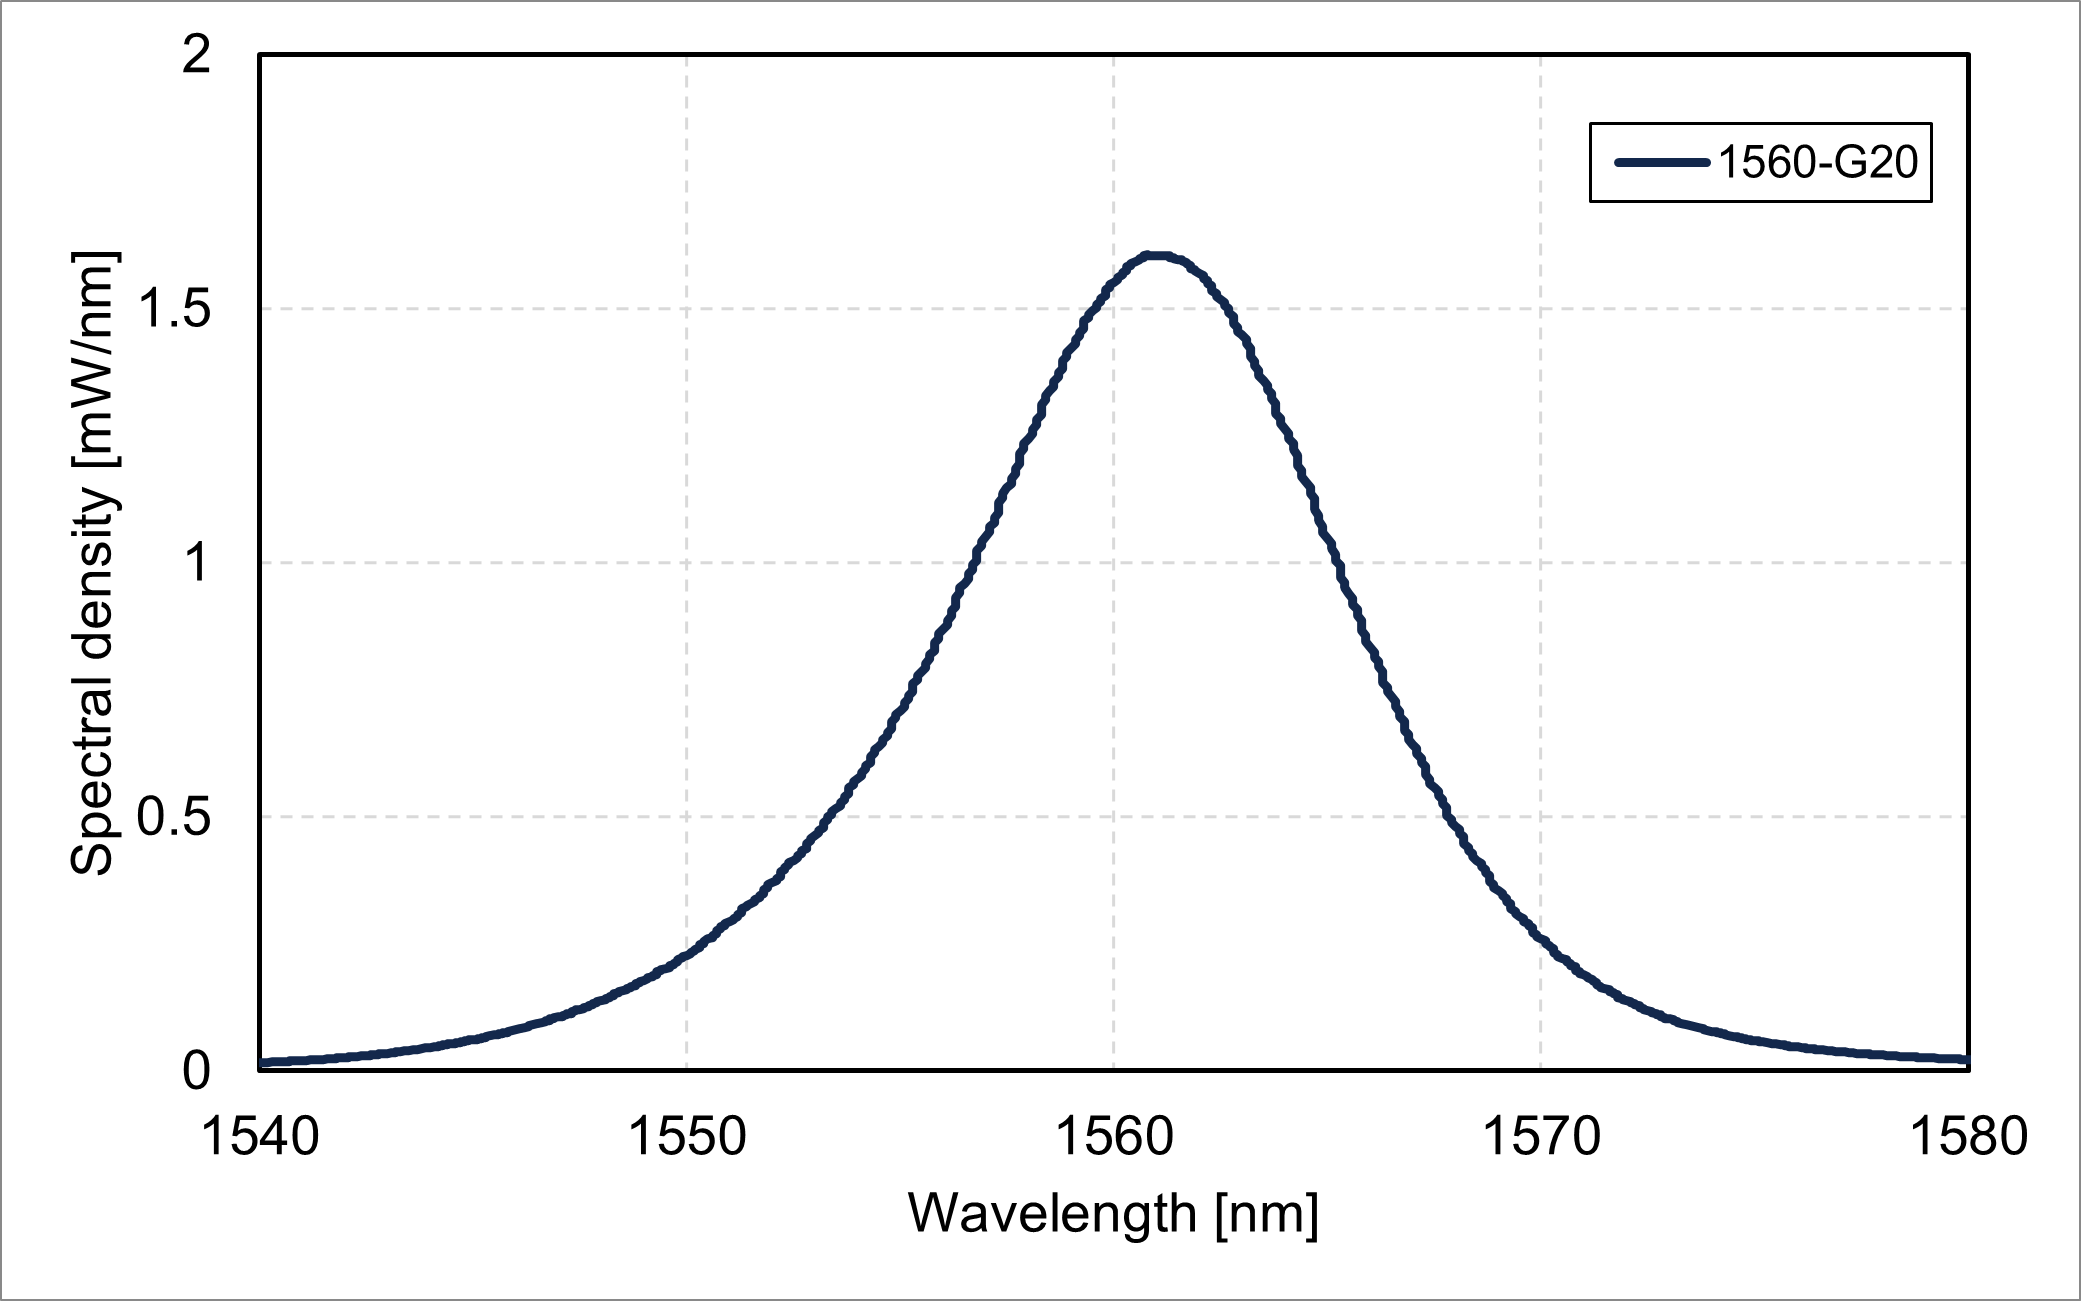 Spectral density vs. wavelength (1560-G20 gaussian-like shape)